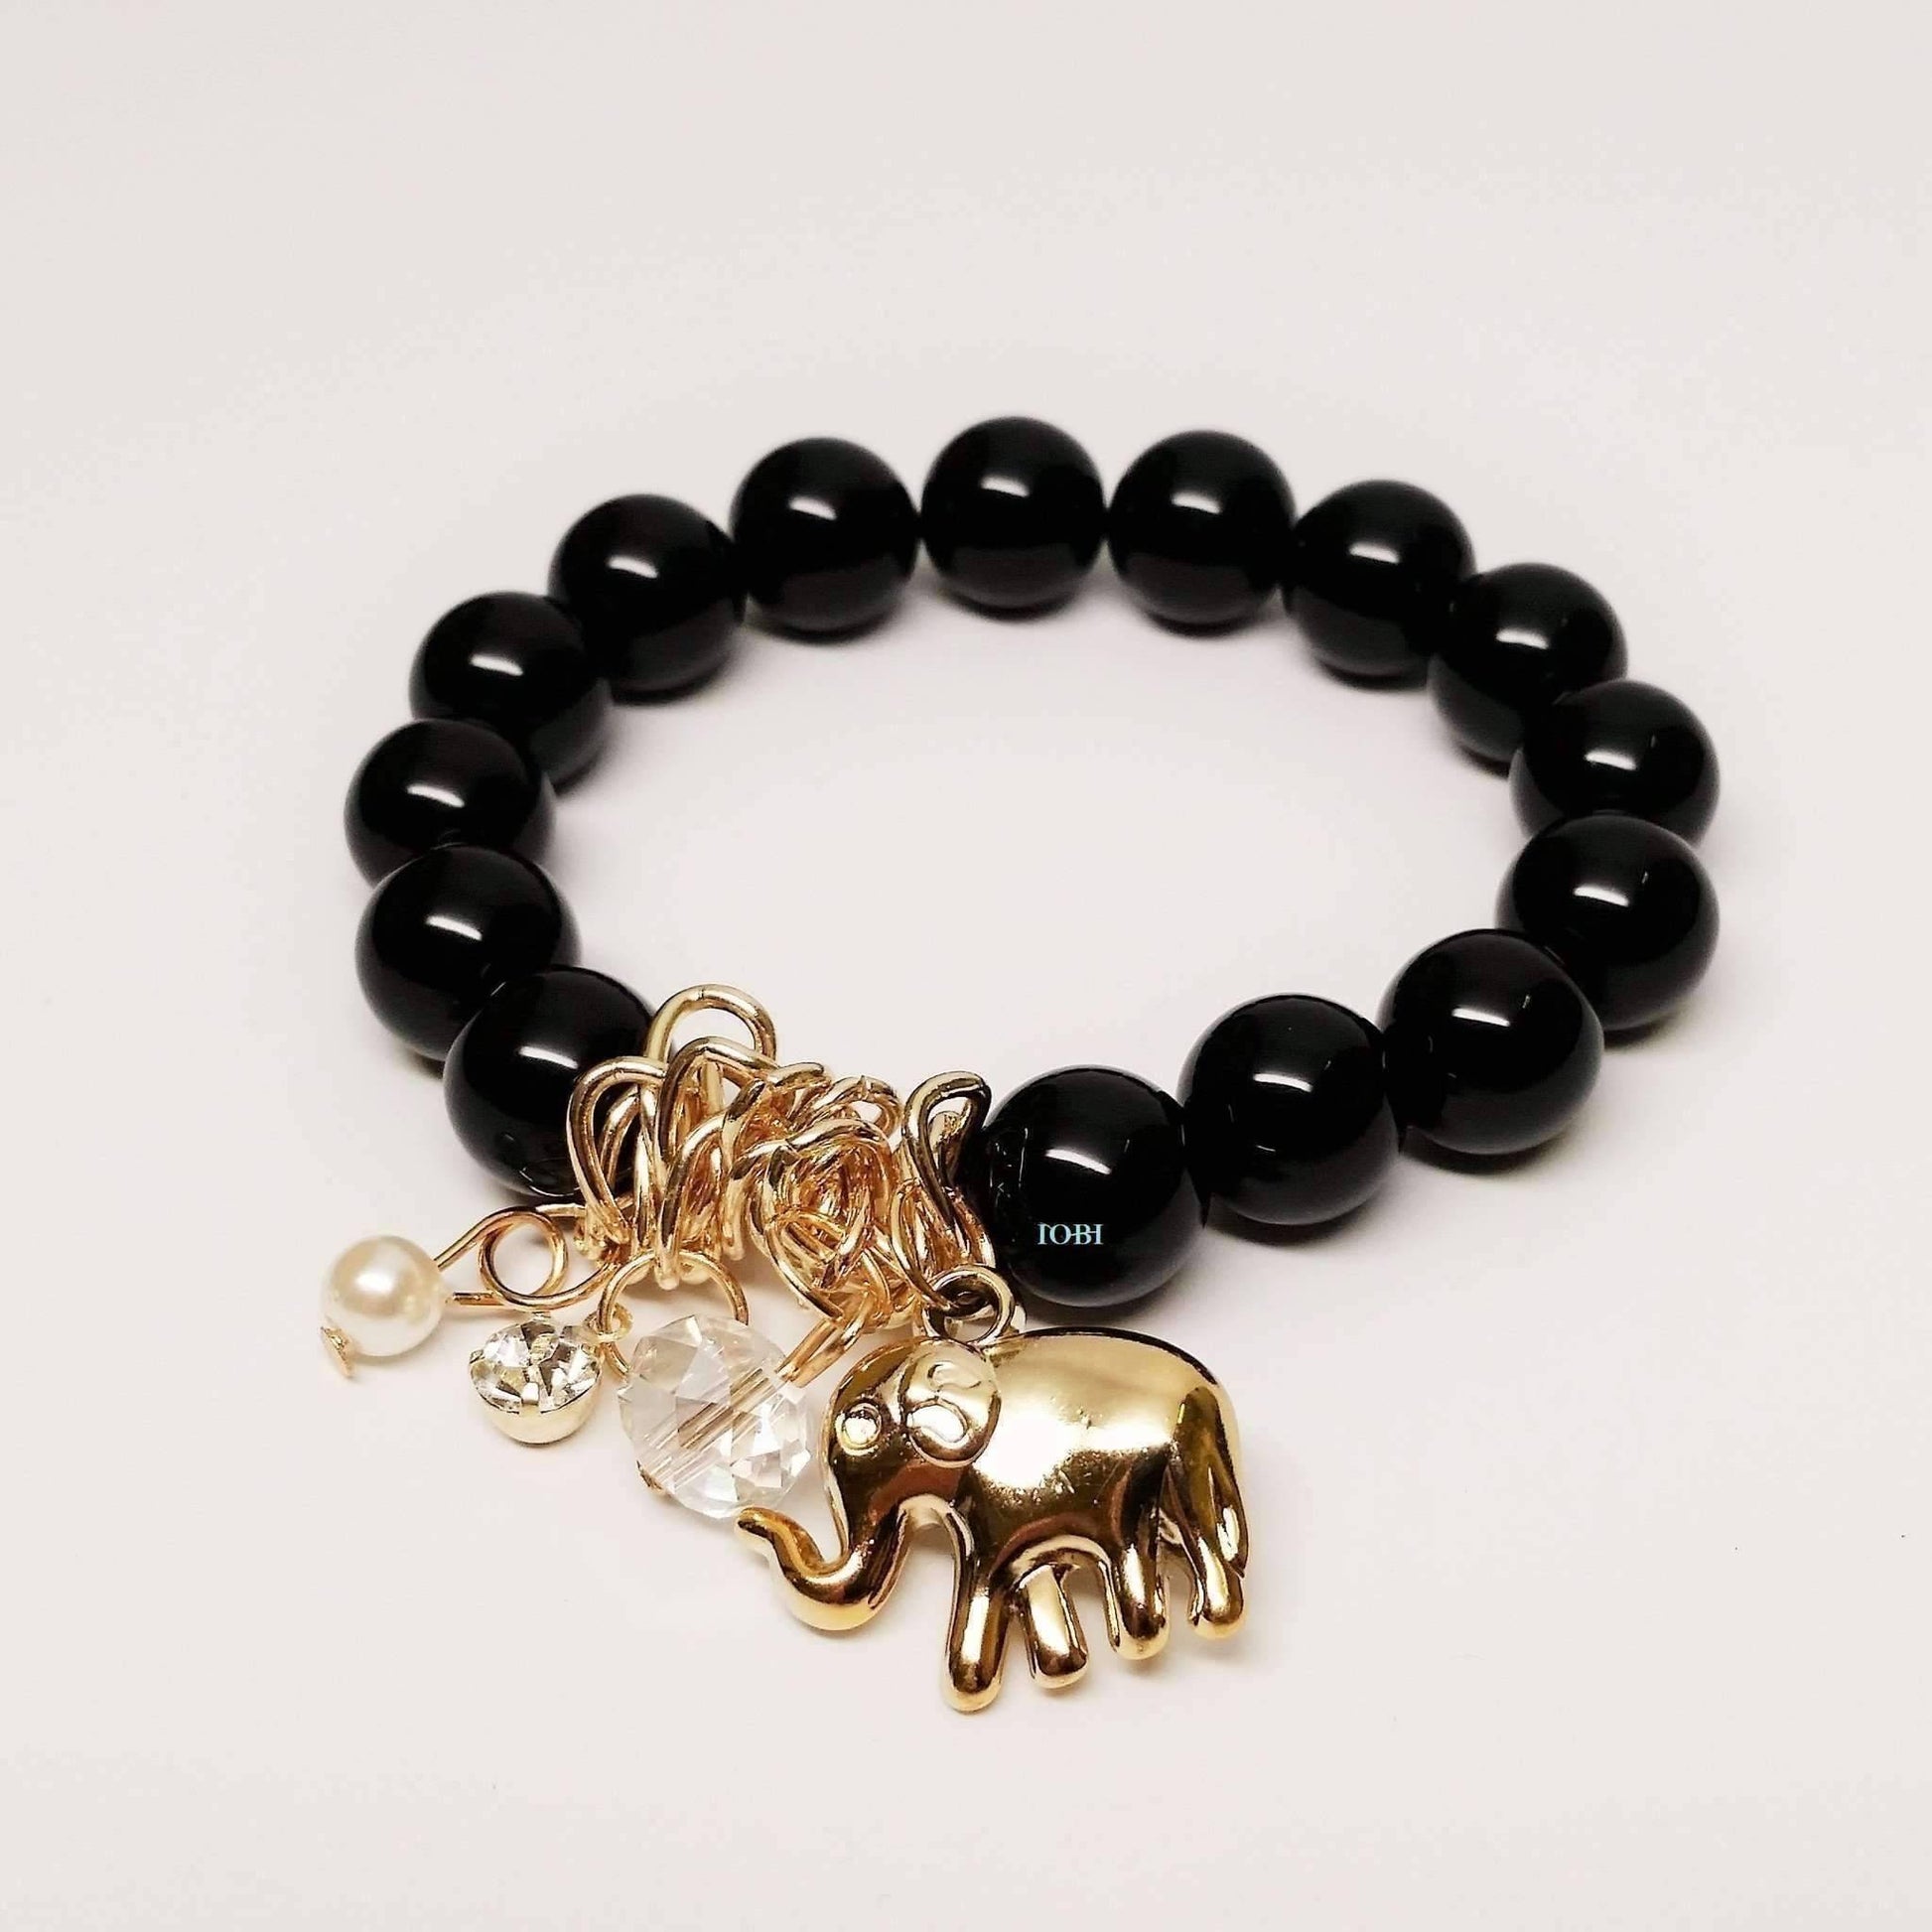 Feshionn IOBI bracelets Ebony Black Lucky Elephant Charm Bead Bracelet - Choose Your Color